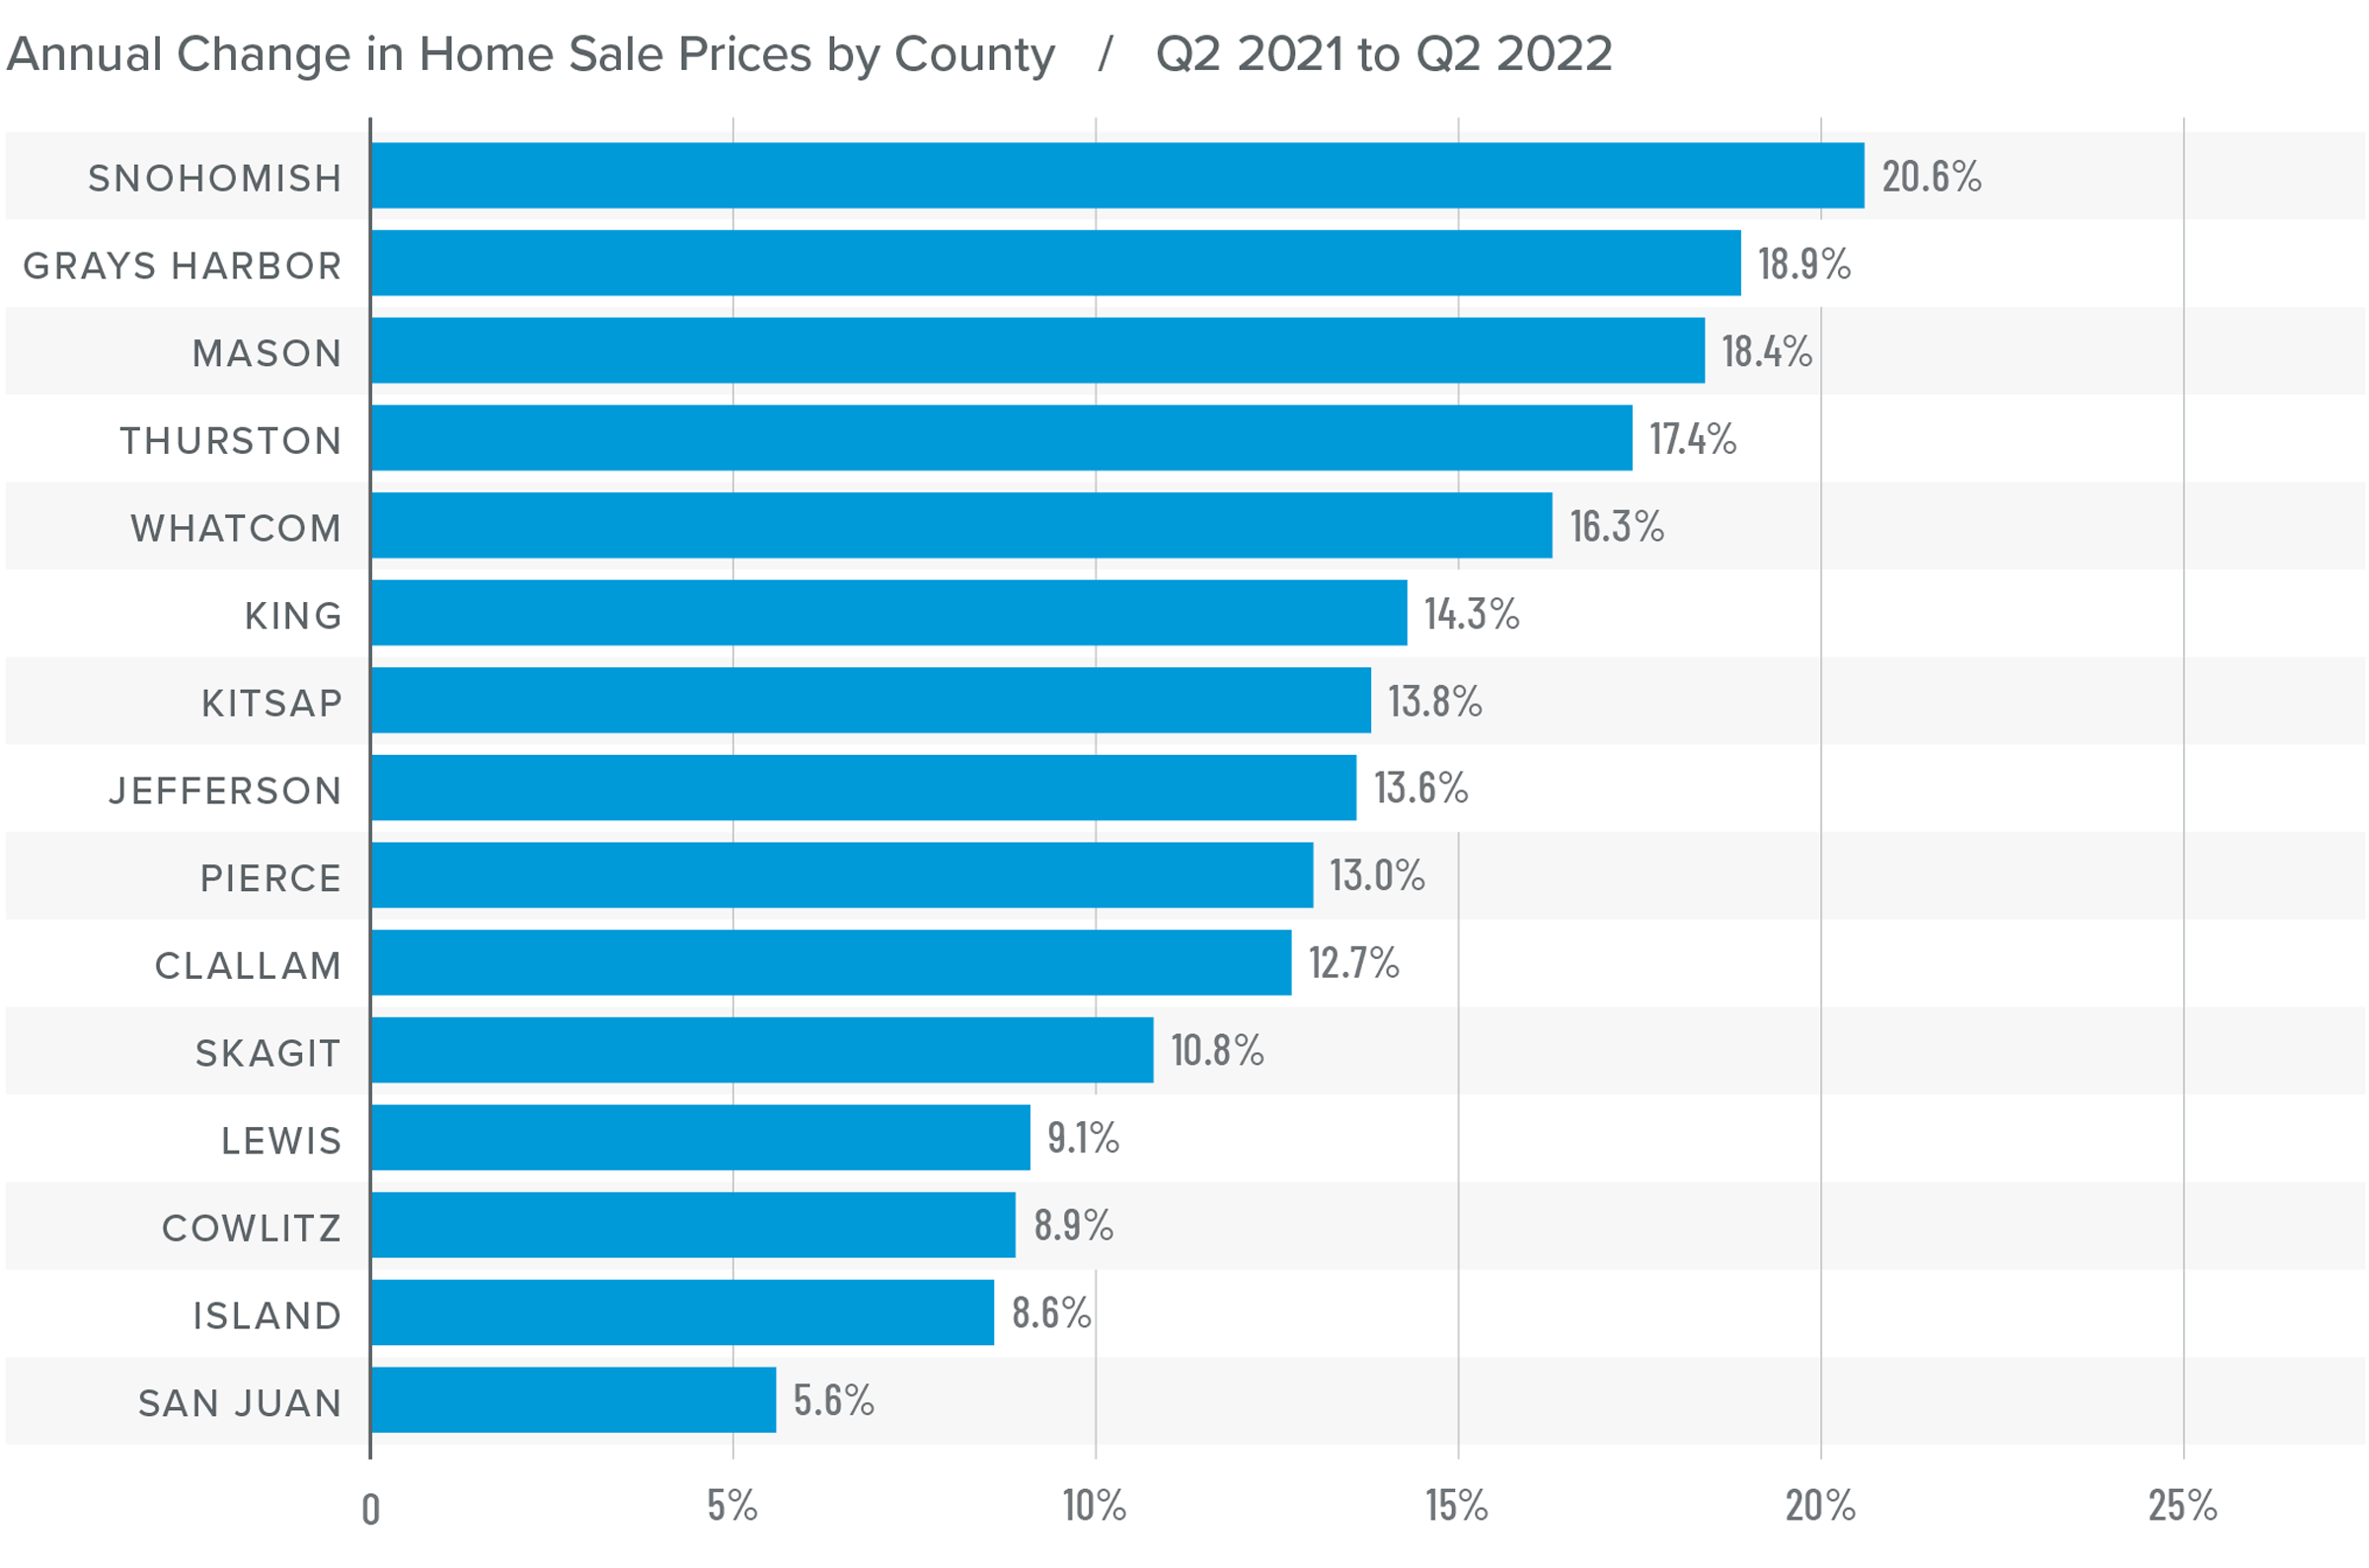 A bar graph showing the annual change in home sale prices for various counties in Western Washington from Q2 2021 to Q2 2022. Snohomish county tops the list at 20.6%, followed by Grays Harbor at 18.9%, Mason at 18.4%, Thurston at 17.4%, Whatcom at 16.3%, King at 14.3%, Kitsap at 13.8%, Jefferson at 13.6%, Pierce at 13%, Clallam at 12.7%, Skagit at 10.8%, Lewis at 9.1%, Cowlitz at 8.9%, Island at 8.6%, and finally San Juan at 5.6%.